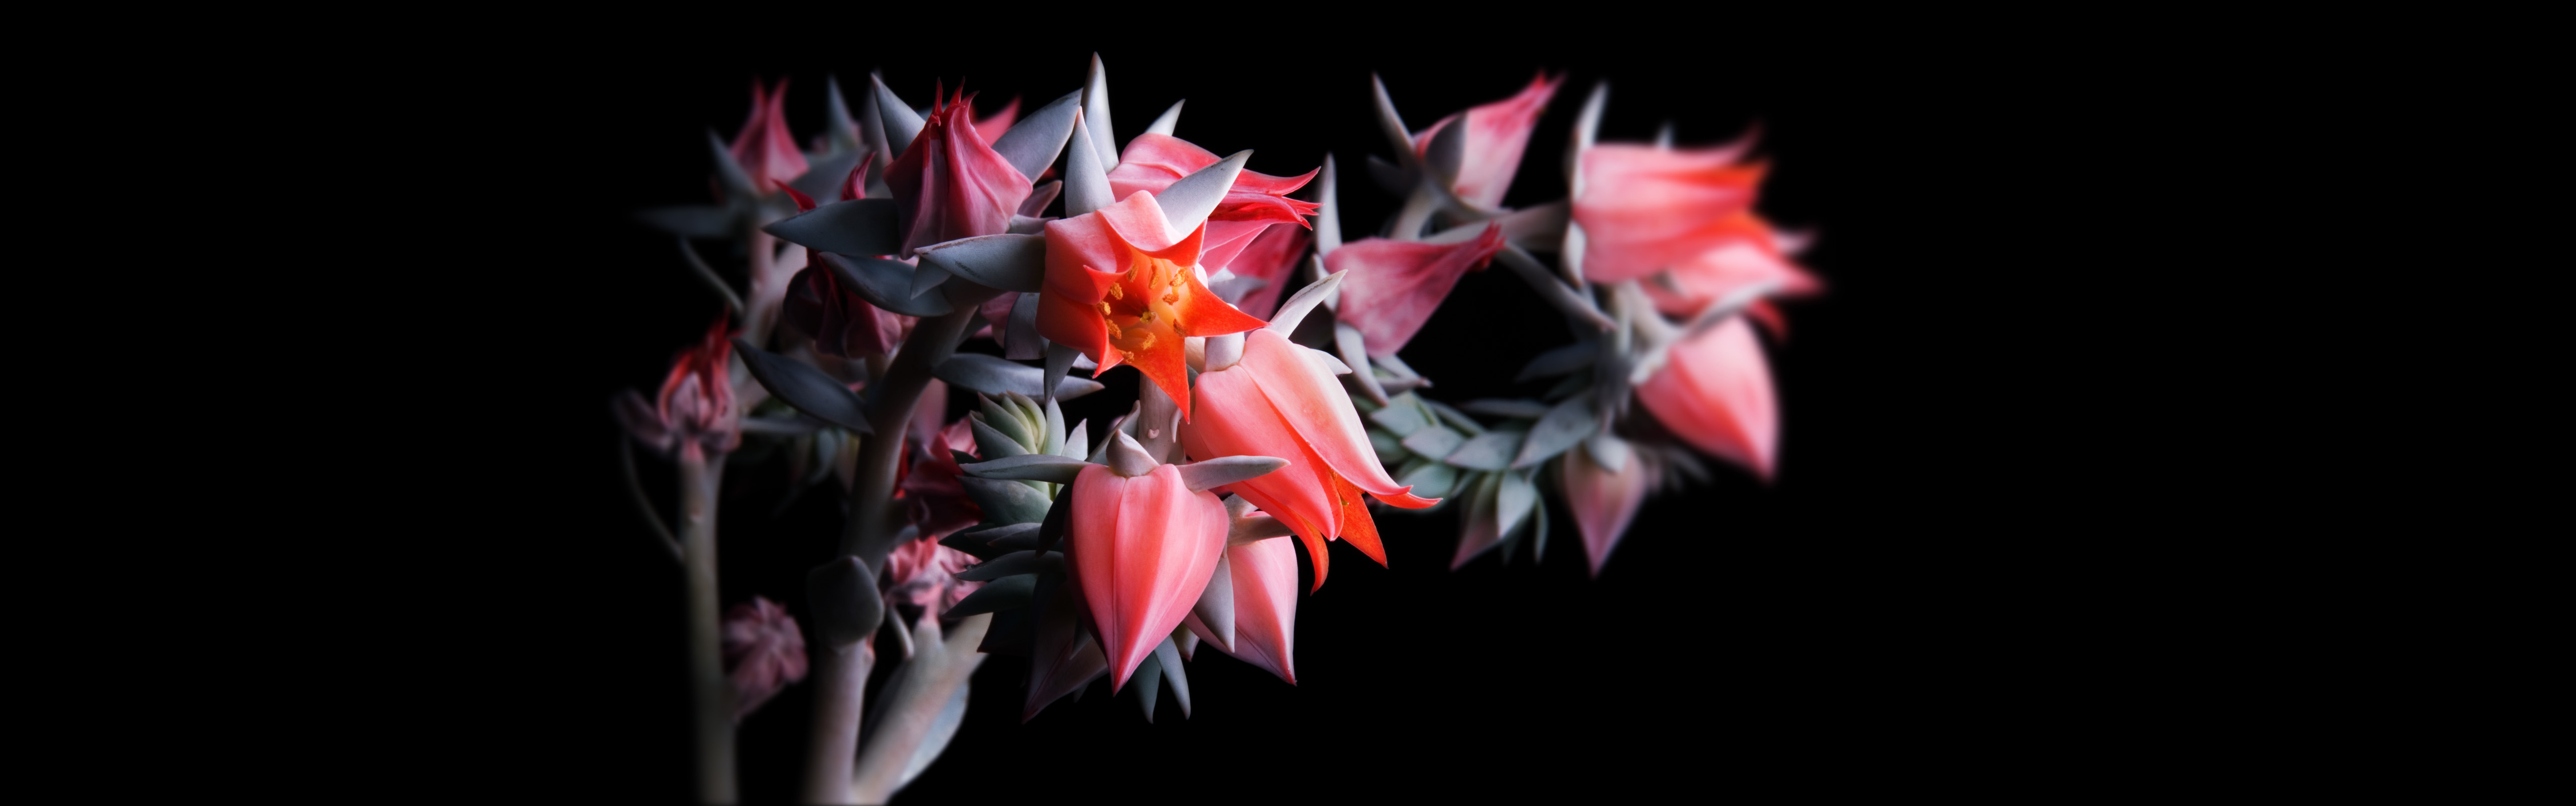 Nature Flower HD Wallpaper by Mando Gomez